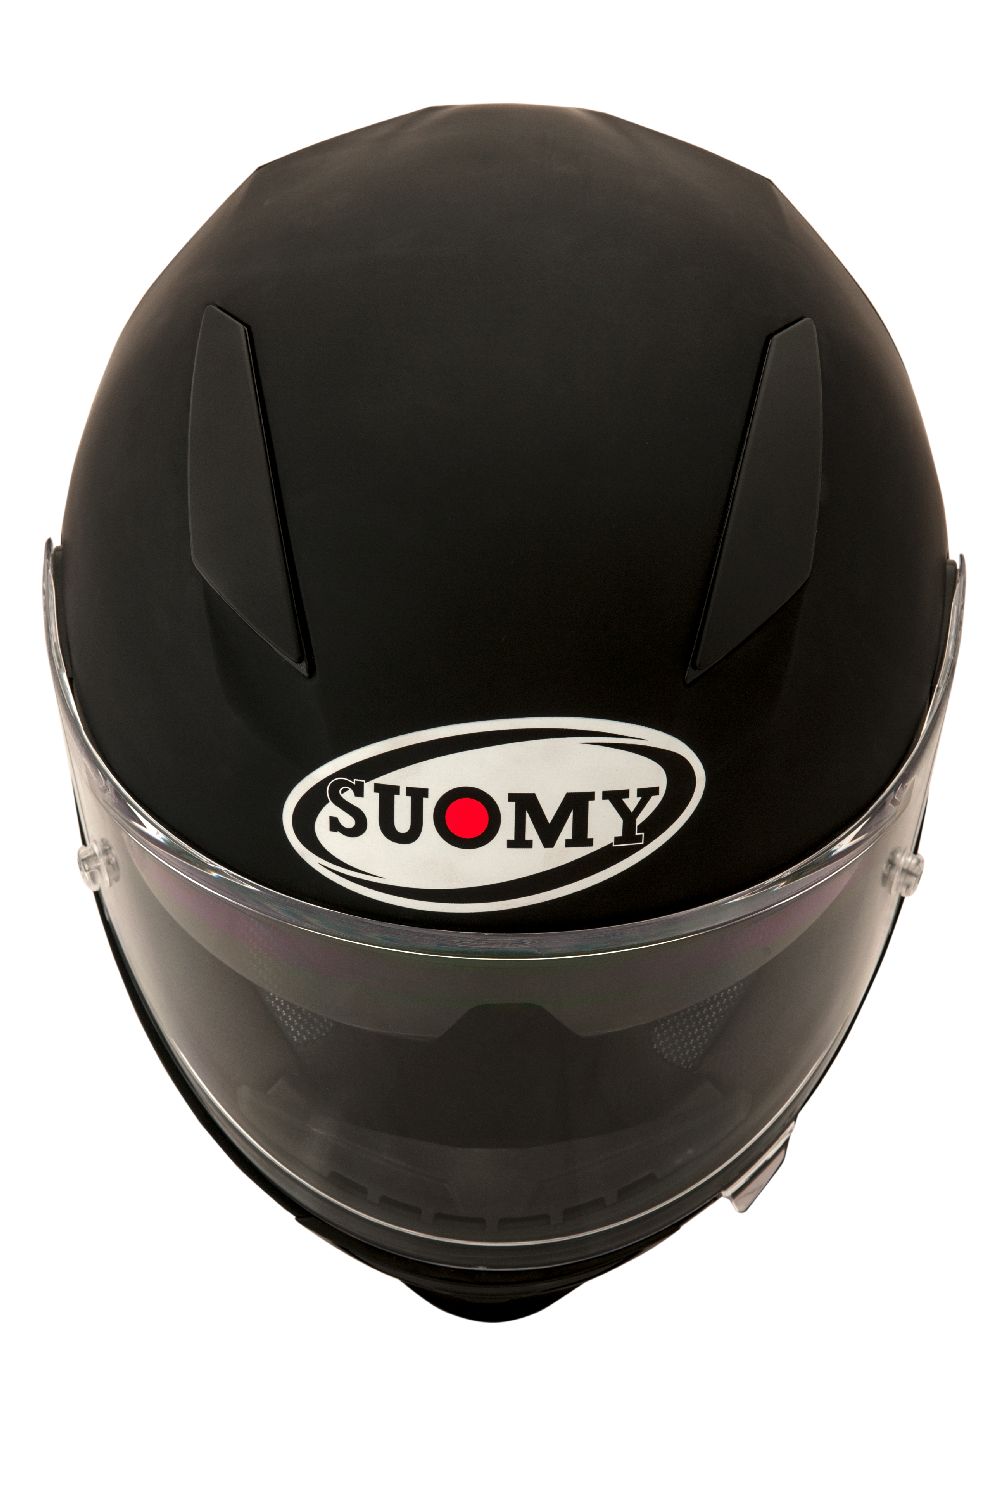 Suomy Speedstar Solid Matte Black Full Face Motorcycle Helmet (XS - 2XL)